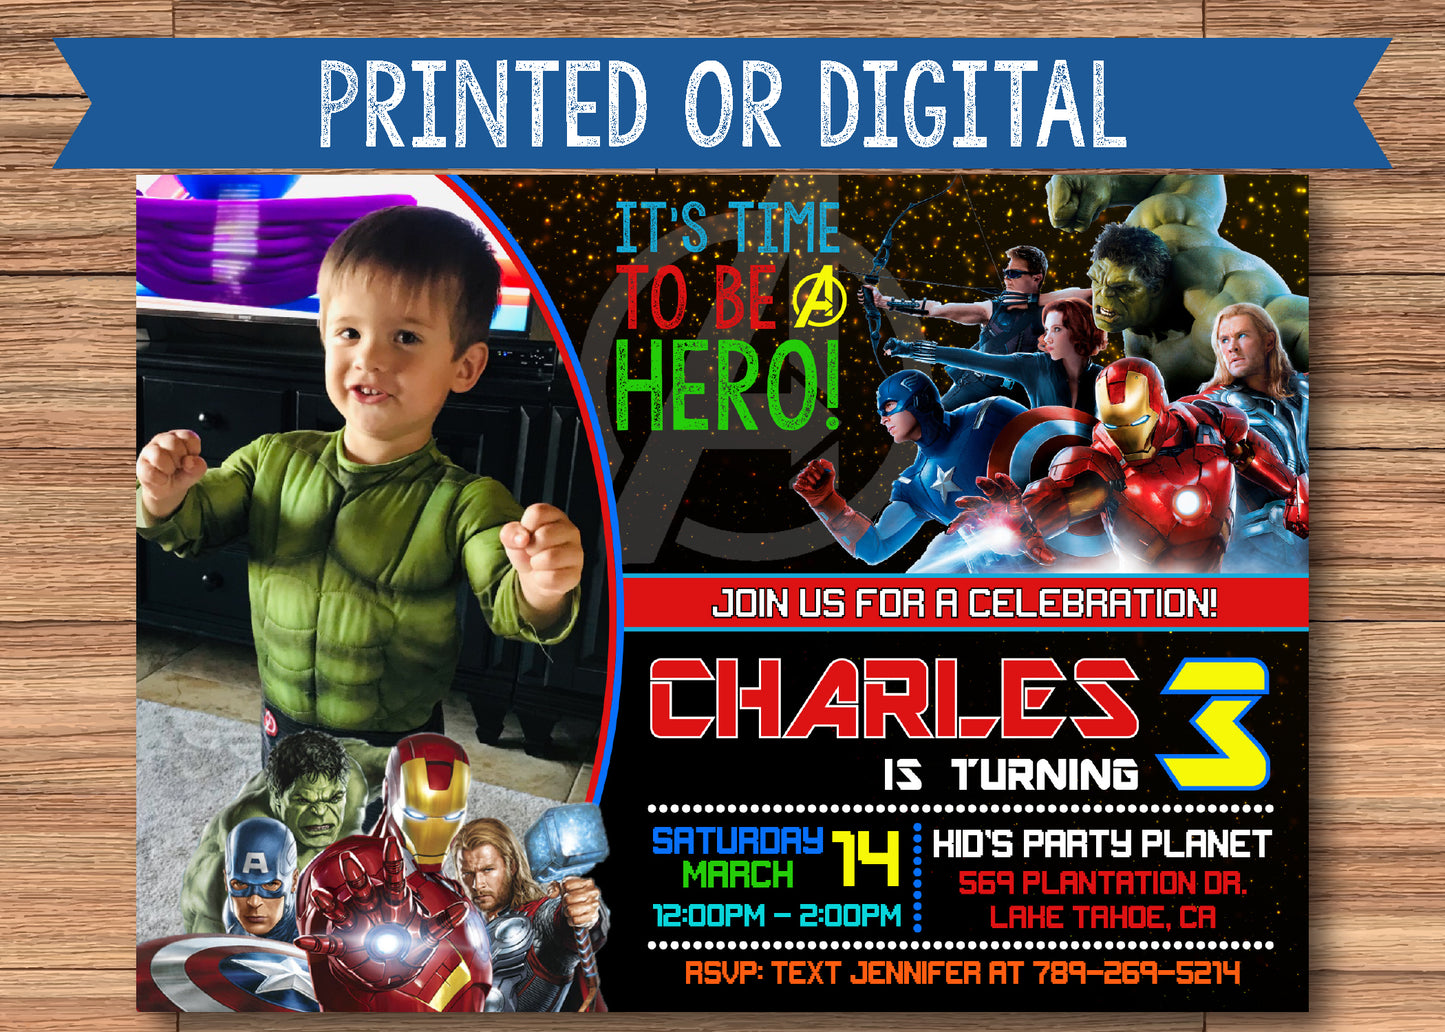 AVENGERS Birthday Party Invitation with Photo - Printed or Digital! Iron Man, Hulk, Captain America!